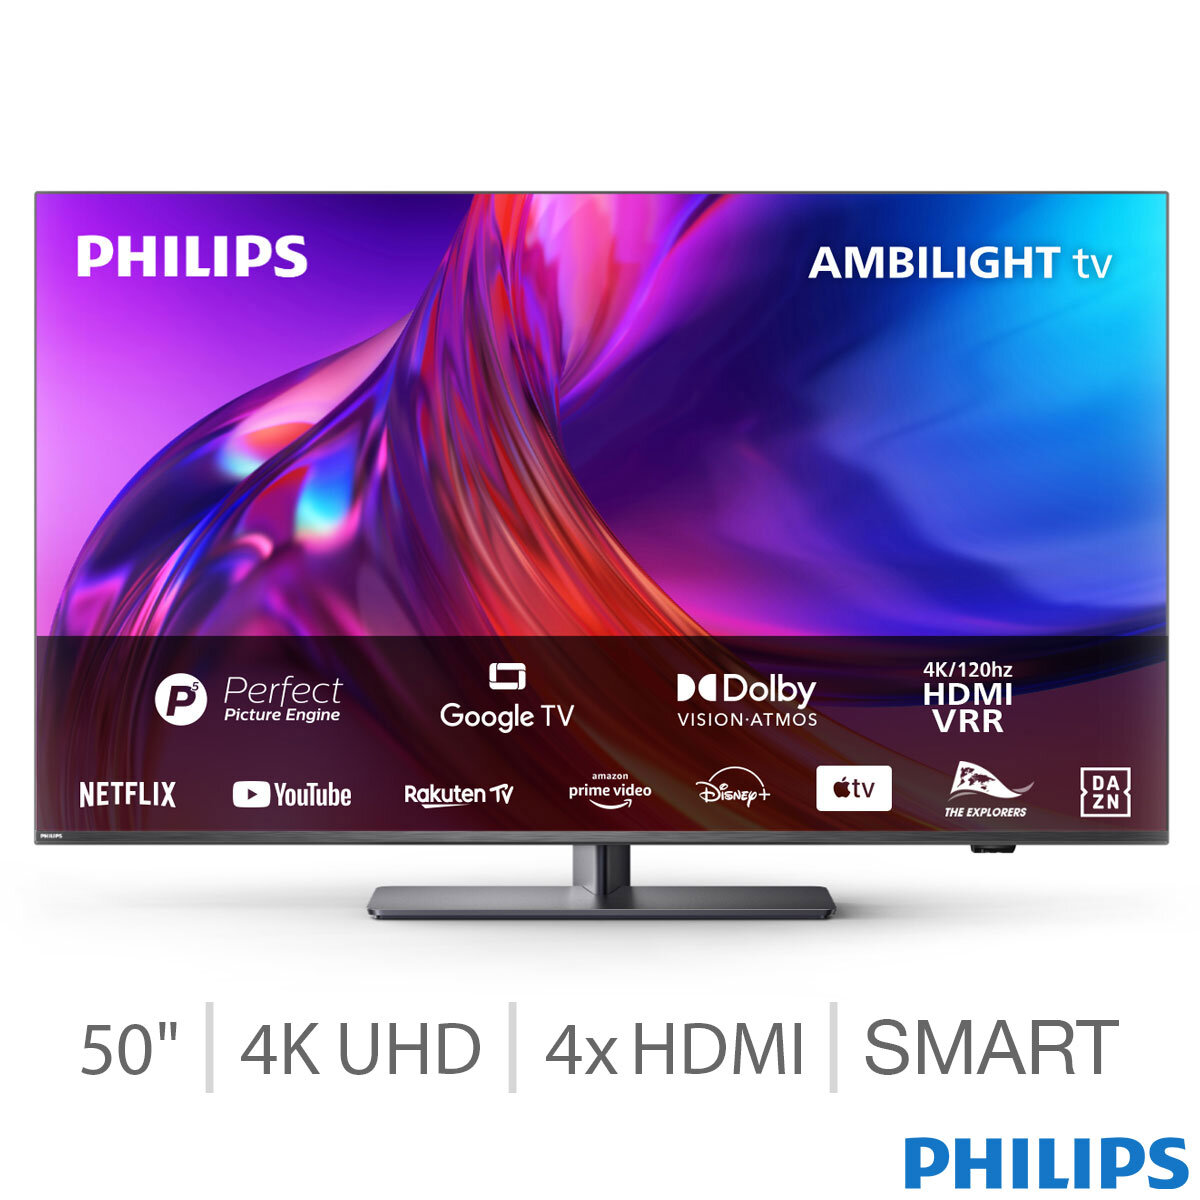 Philips 50PUS8808/12 The One 4K UHD 120Hz LED Ambilight TV